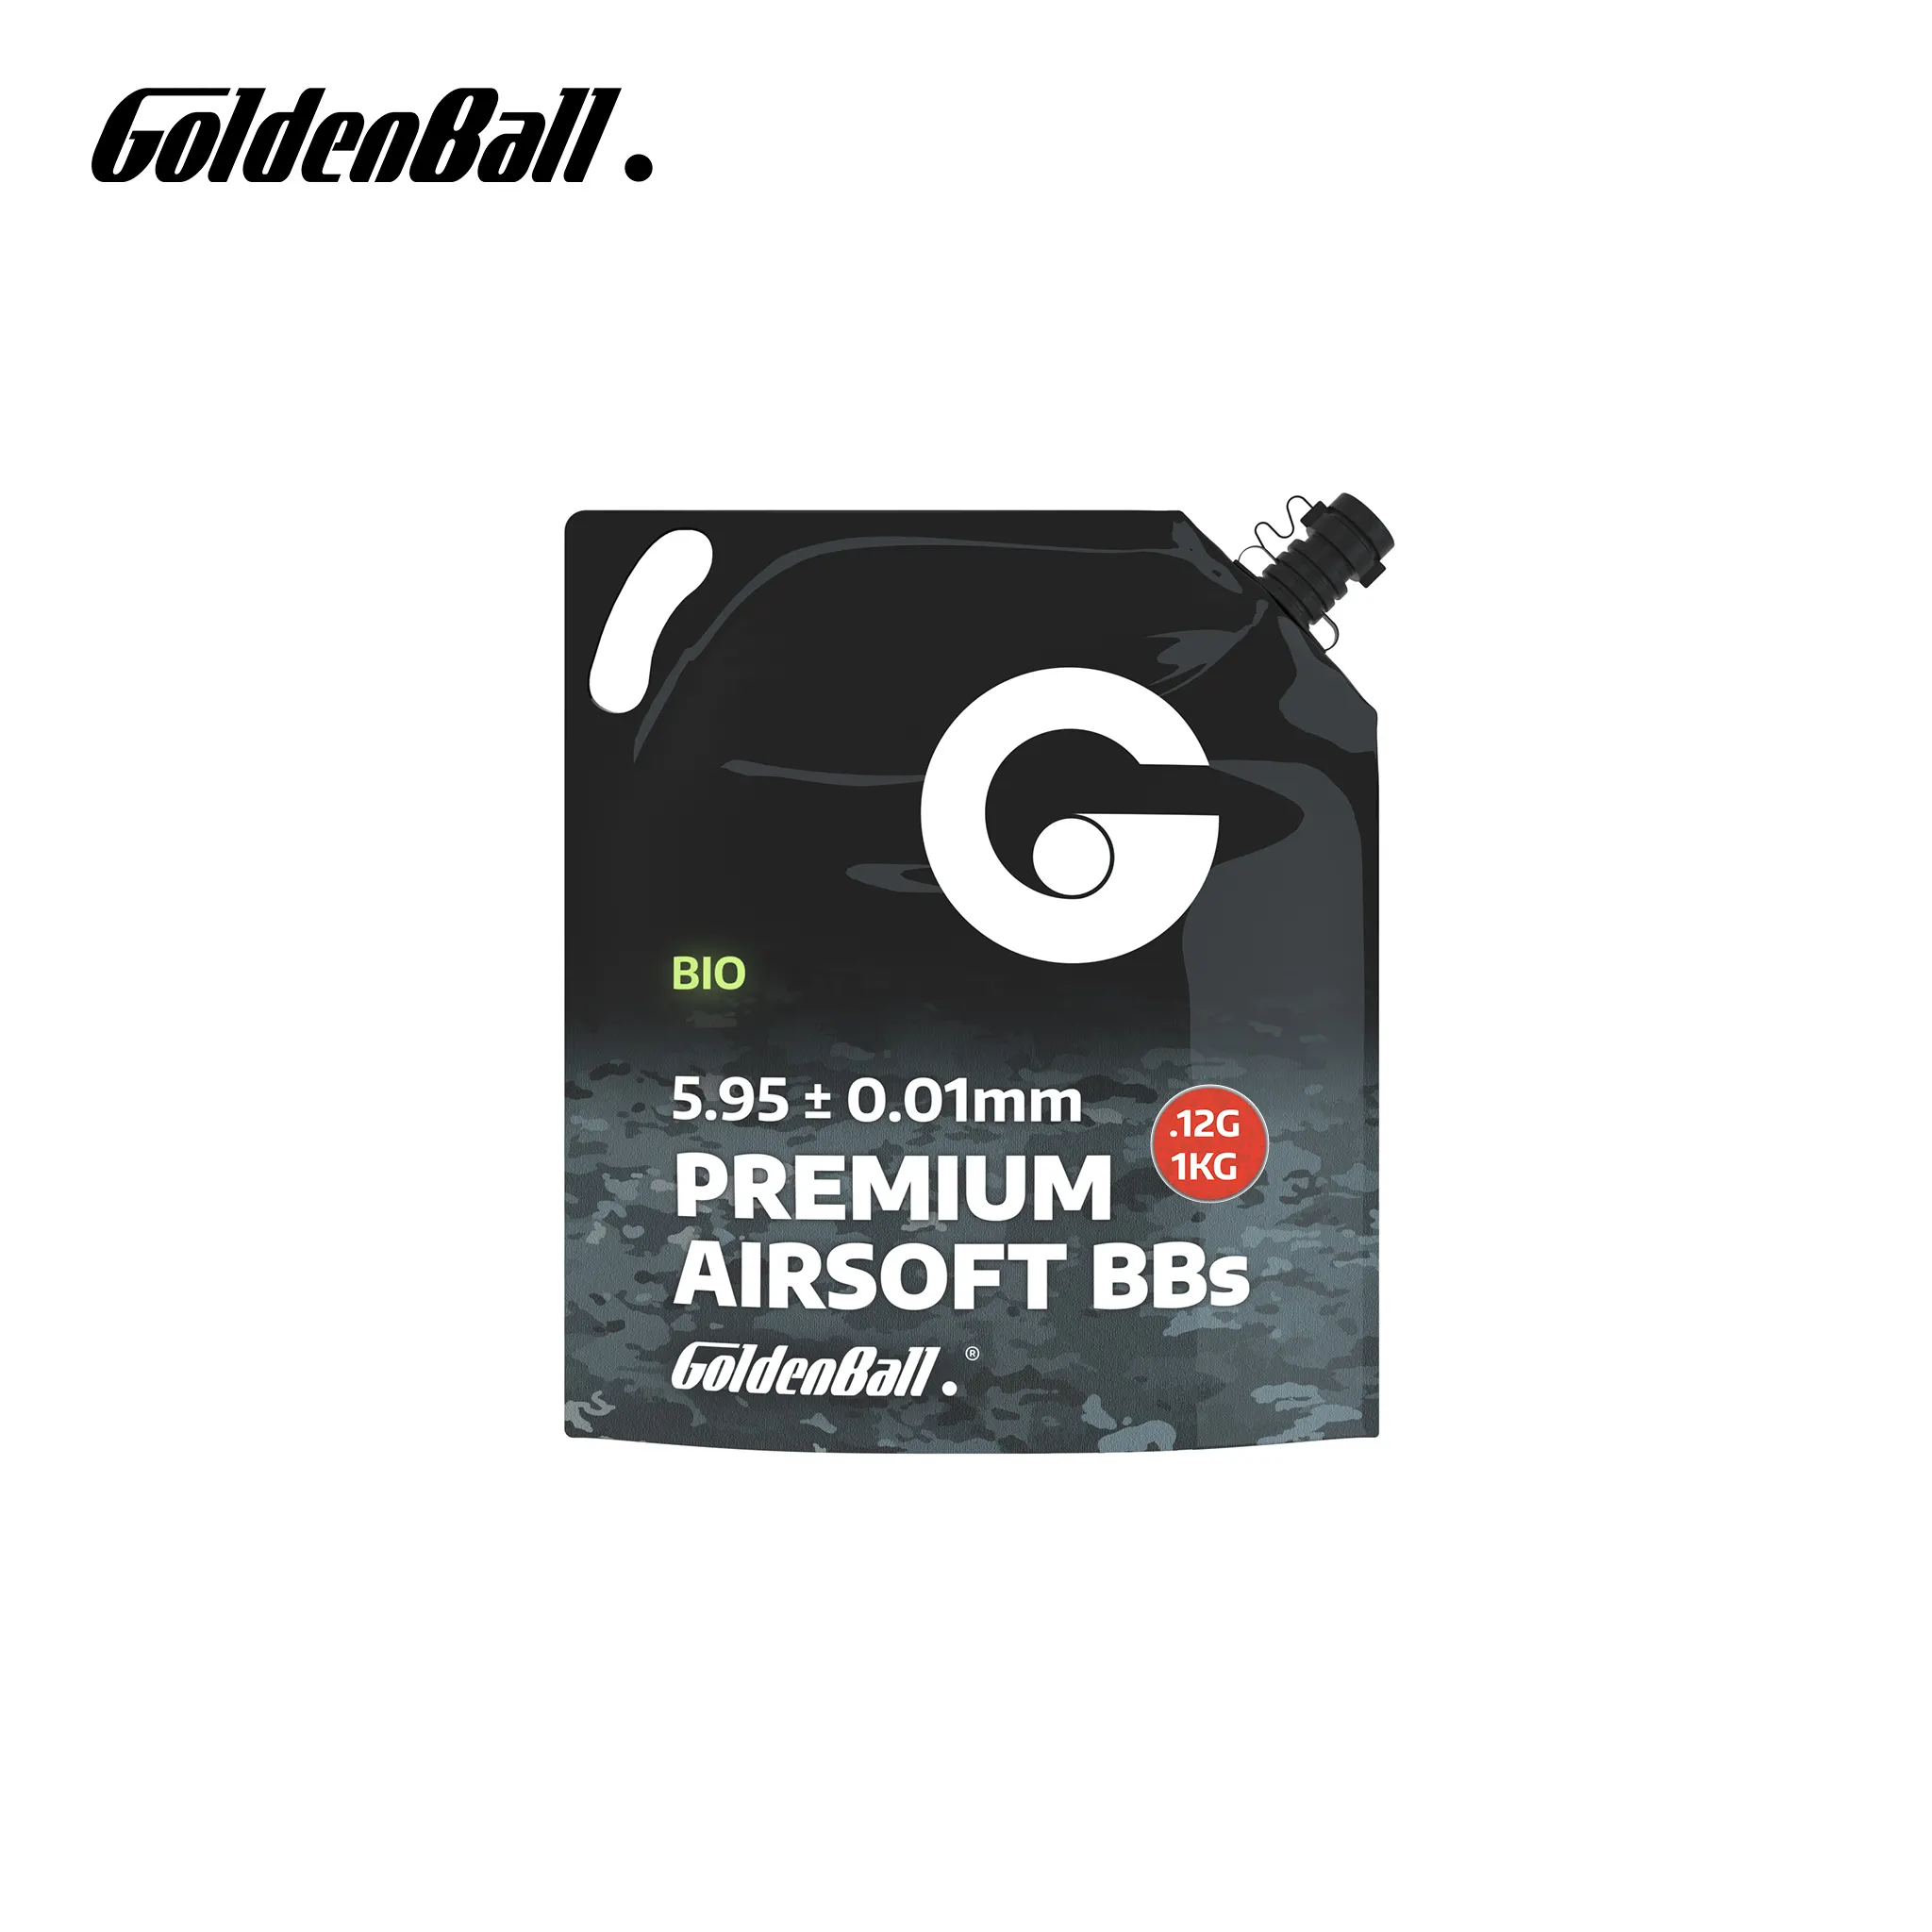 Goldenball 0.12g Biodegradabile Premium Airsoft BB Pellet 5.95 +/-0.01 millimetri 1kg 8333 giri